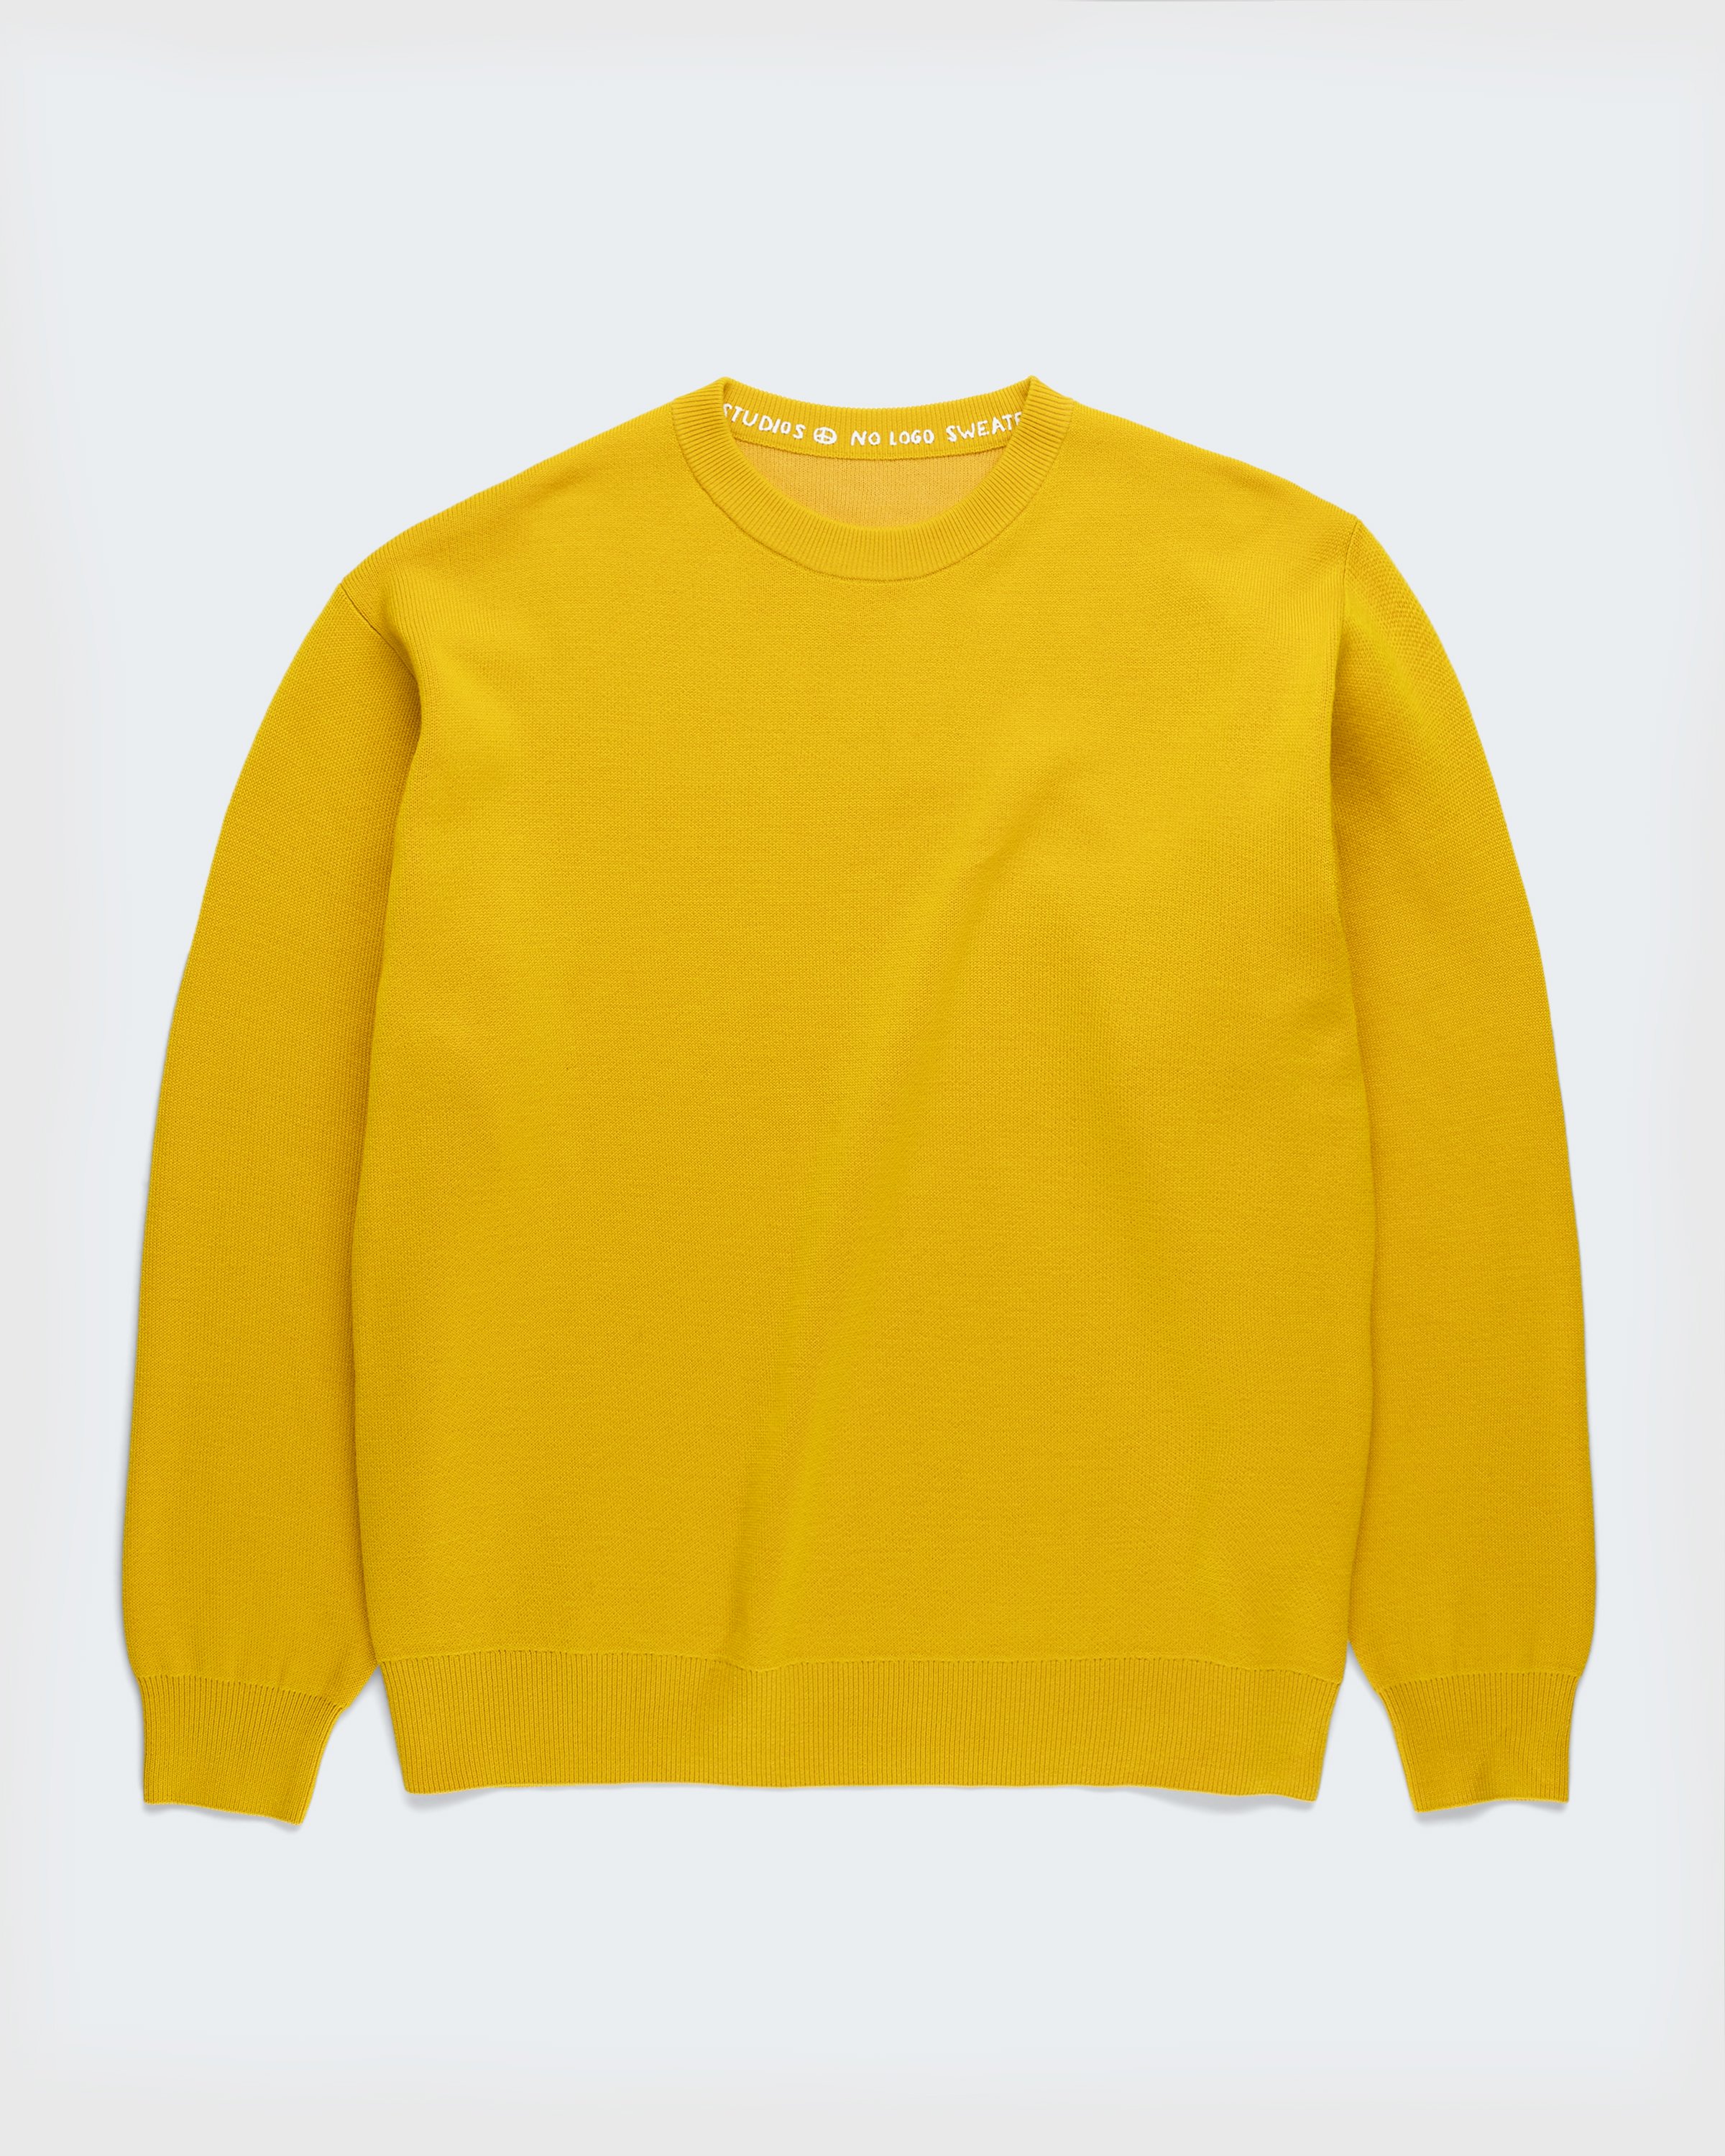 Acne Studios - Merino Wool Crewneck Sweater Yellow - Clothing - Yellow - Image 1